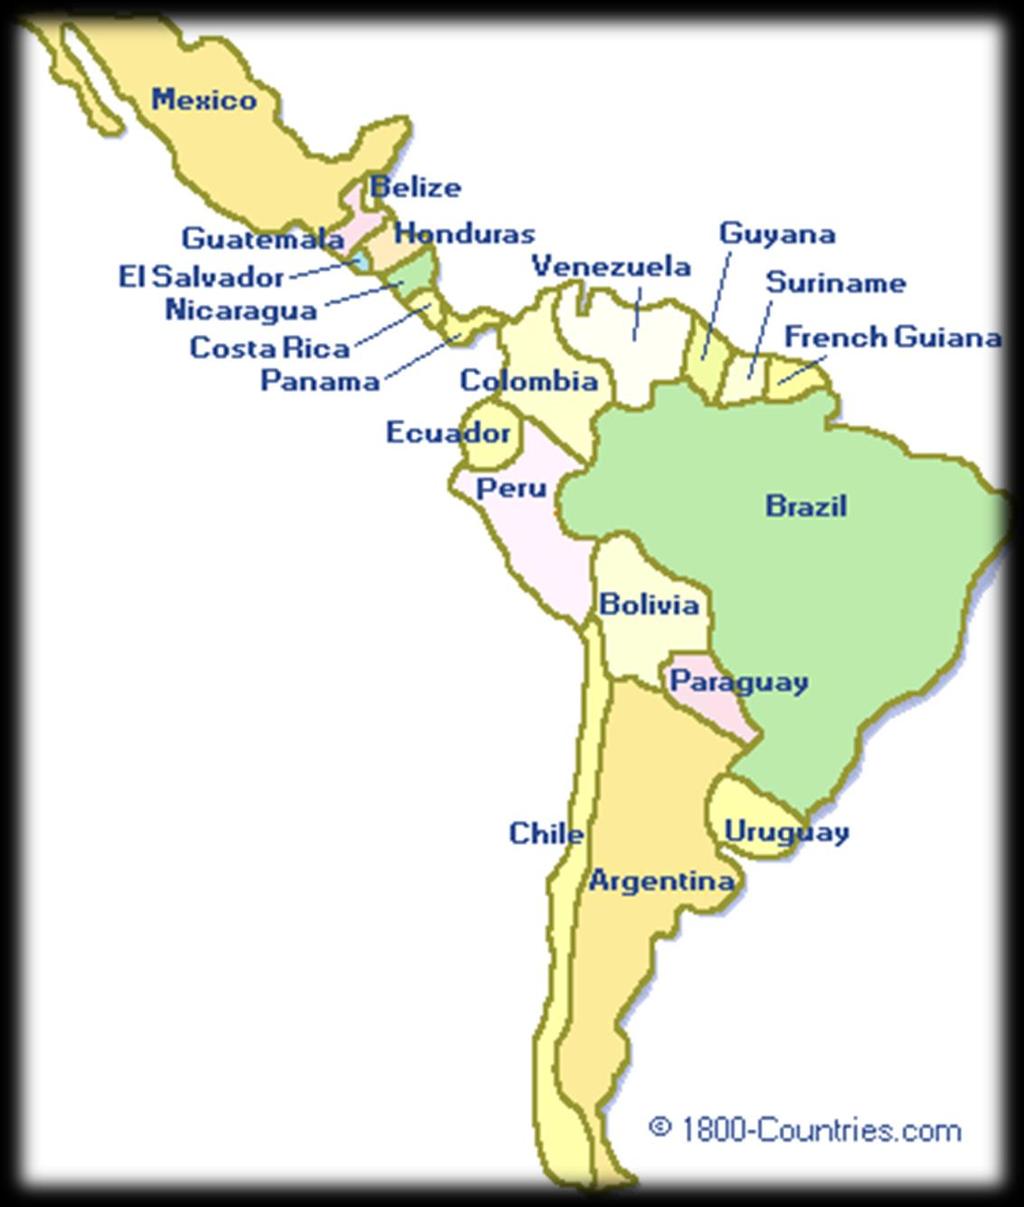 SS6 Unit 1: Latin America